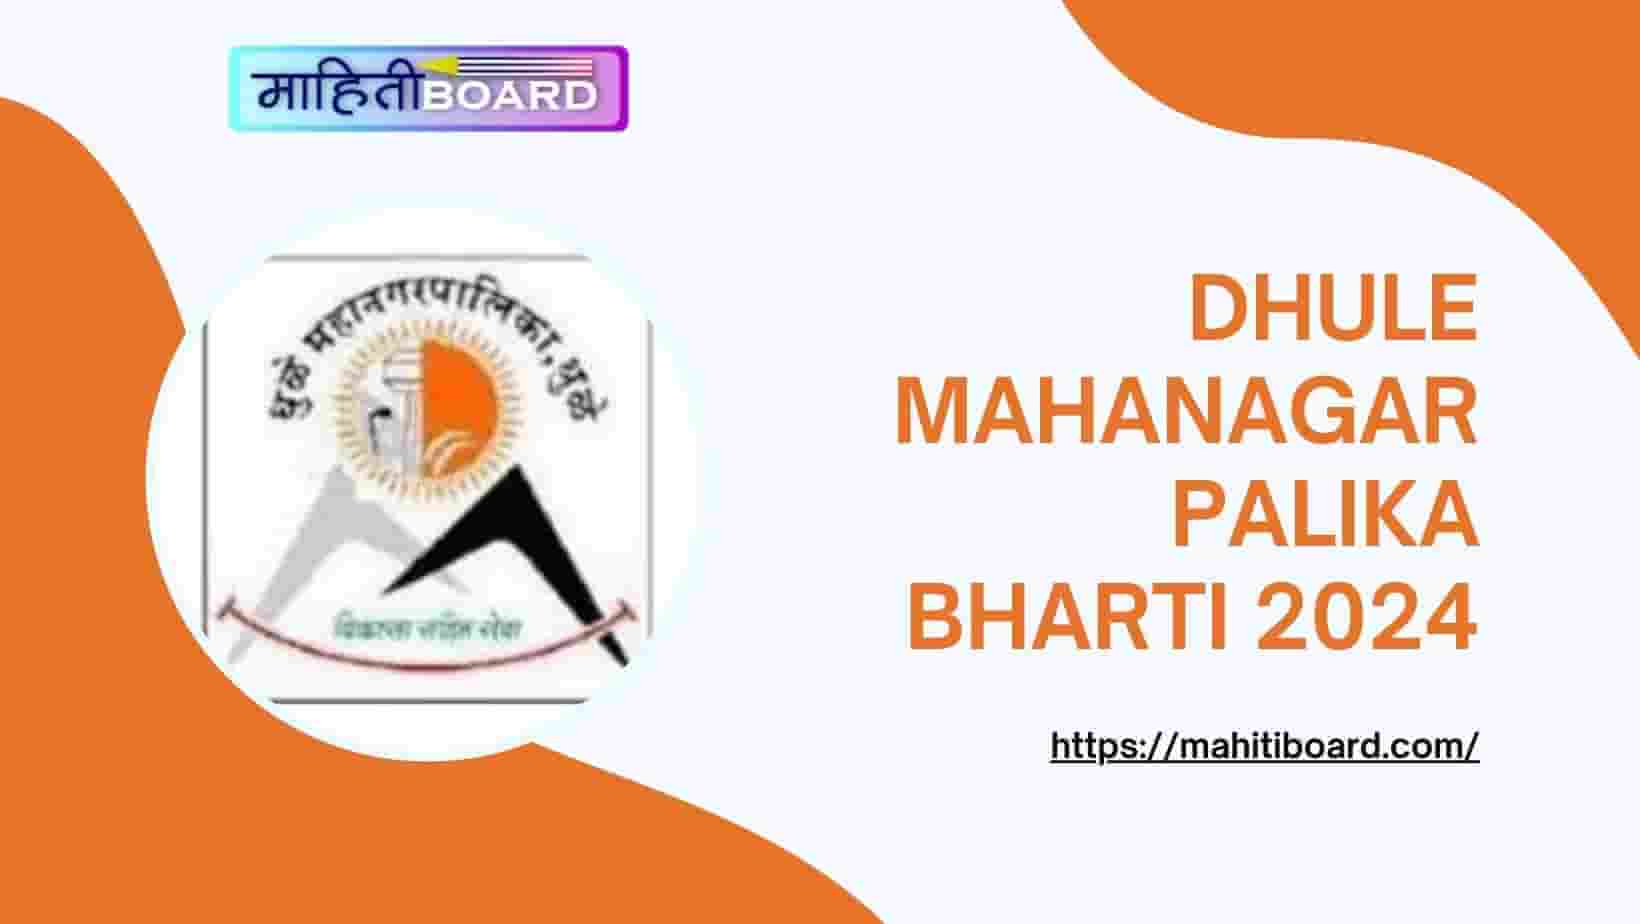 Dhule Mahanagarpalika Bharti 2024